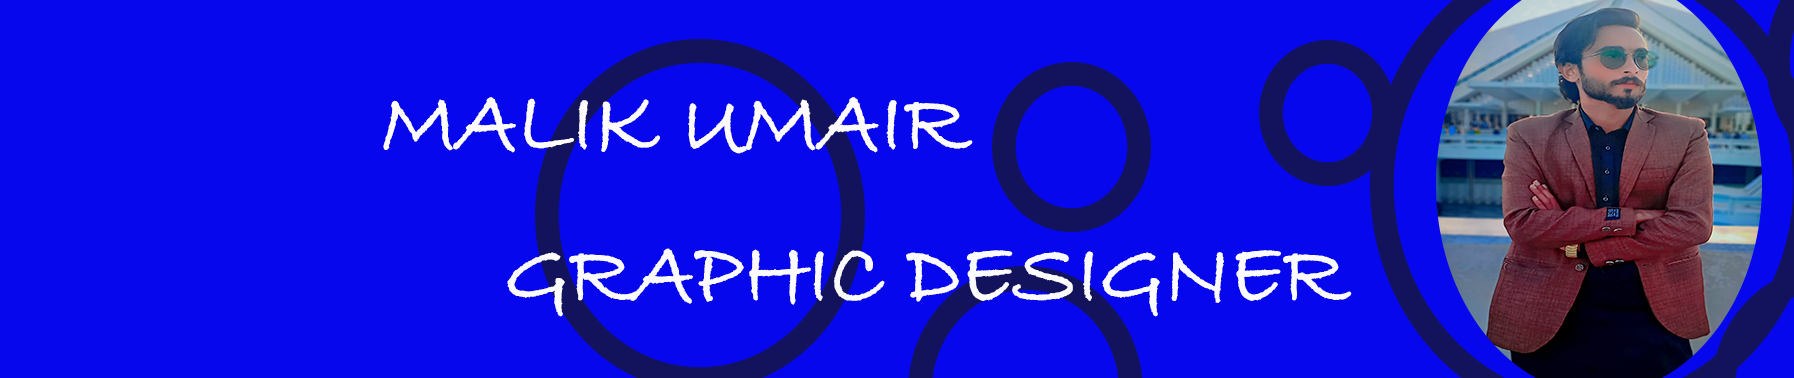 Muhammad Umair's profile banner